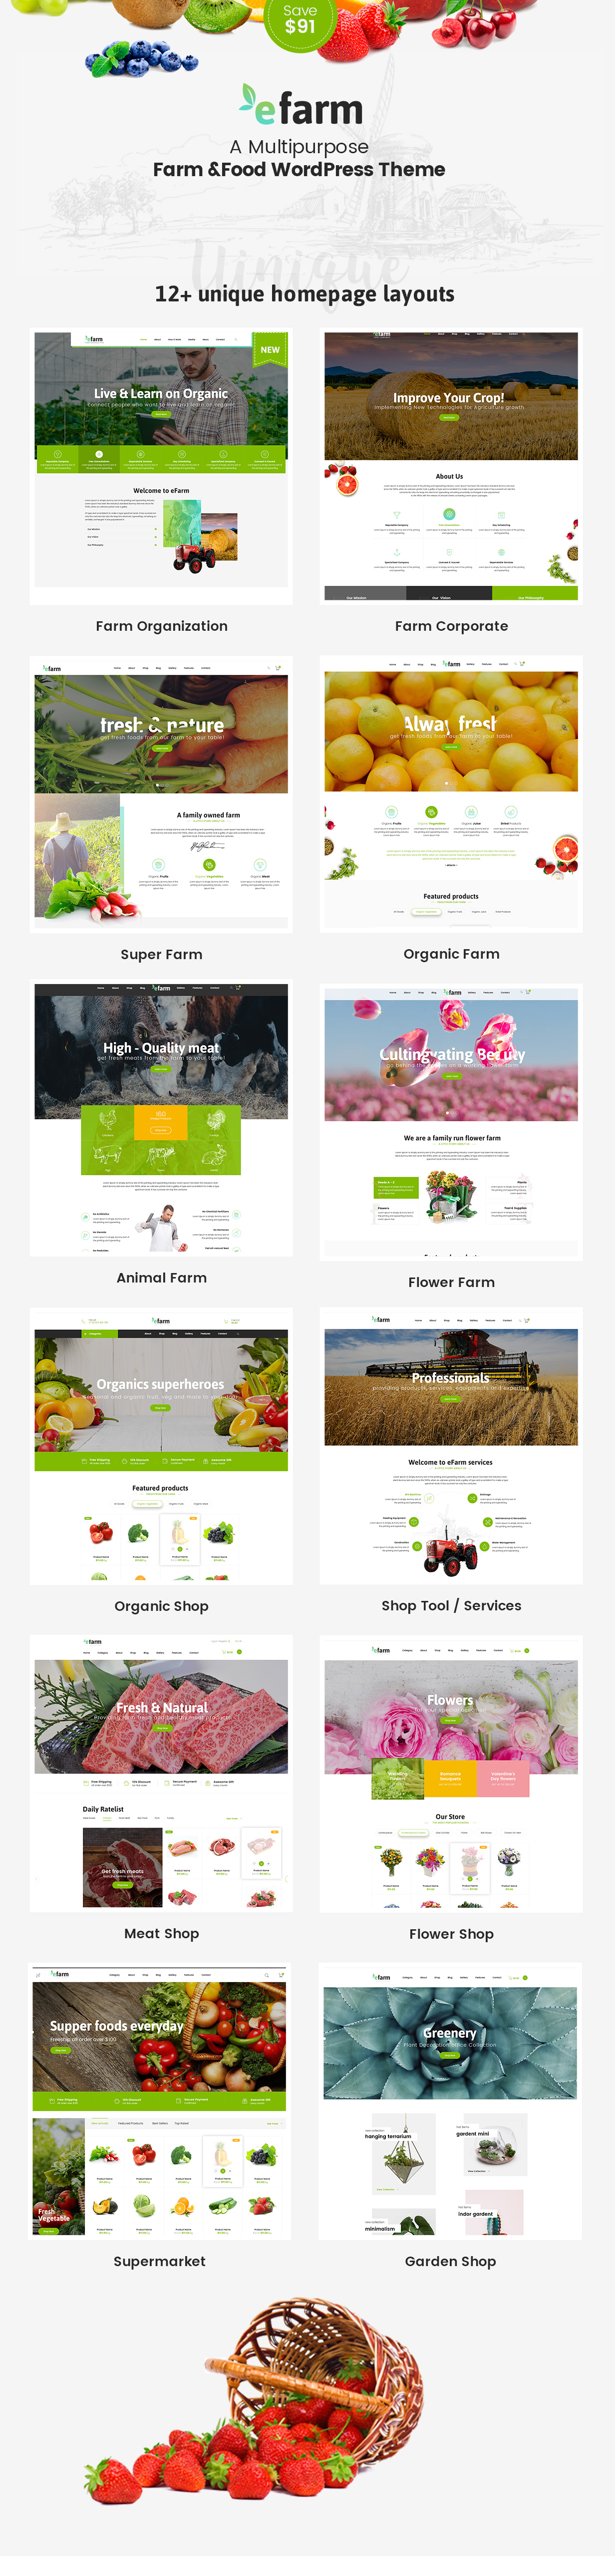 eFarm - A Multipurpose Food & Farm WordPress Theme - 6